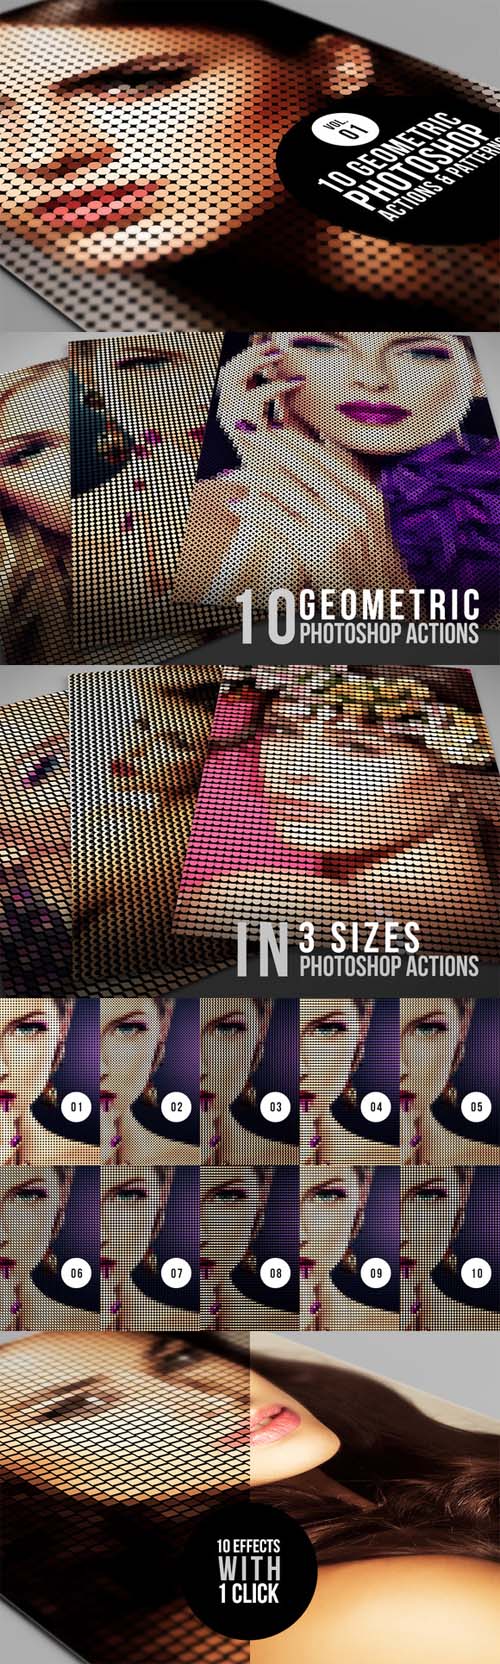 CreativeMarket - 10 Geometric Photoshop Actions 01 16939